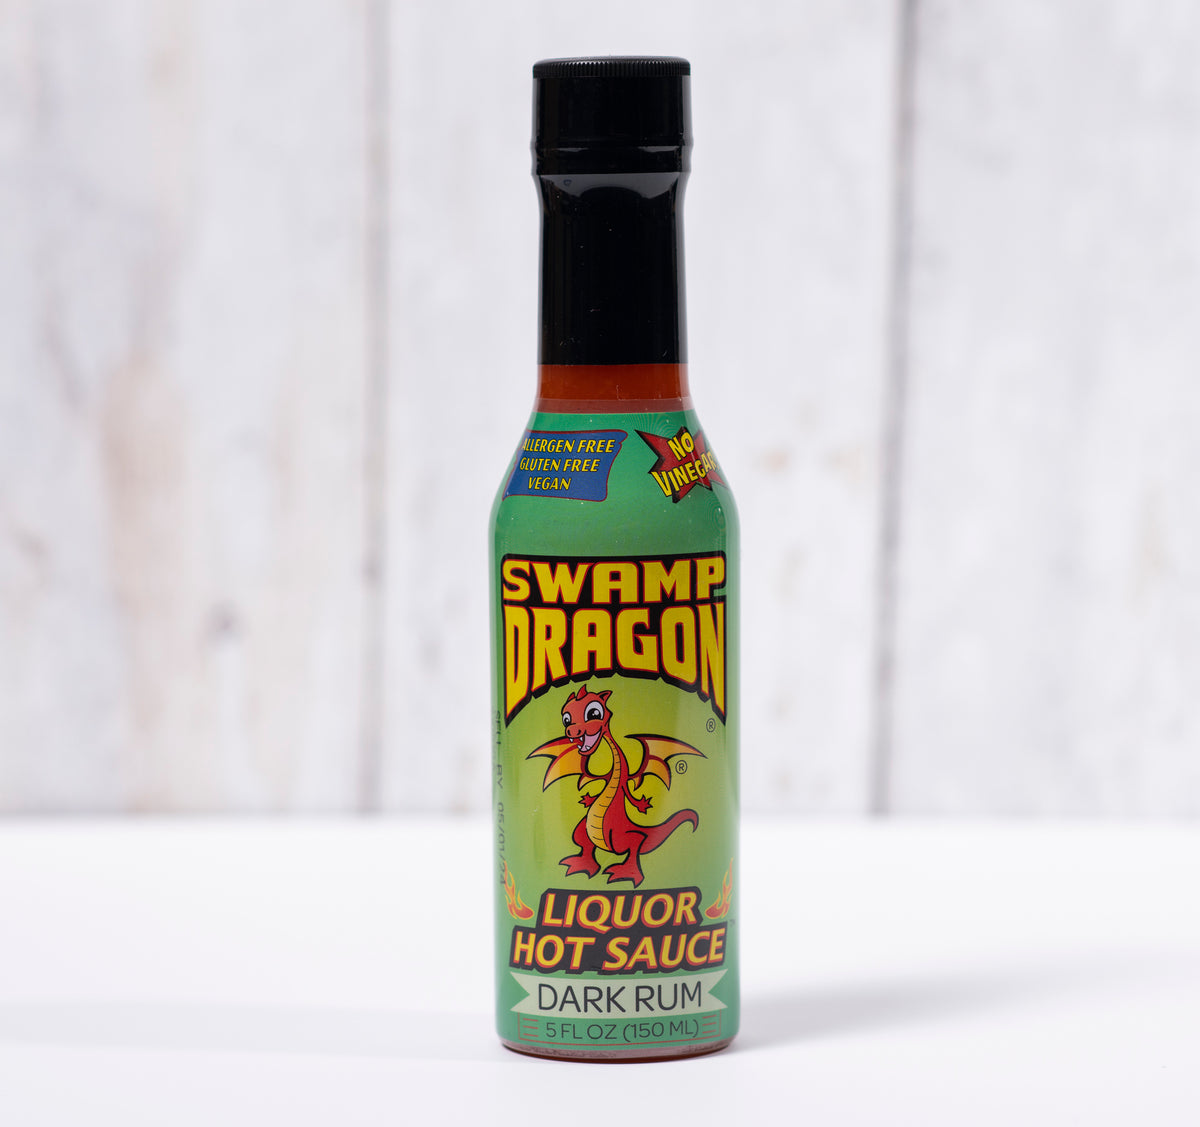 5 ounce bottle of Swamp Dragon Rum Hot Sauce